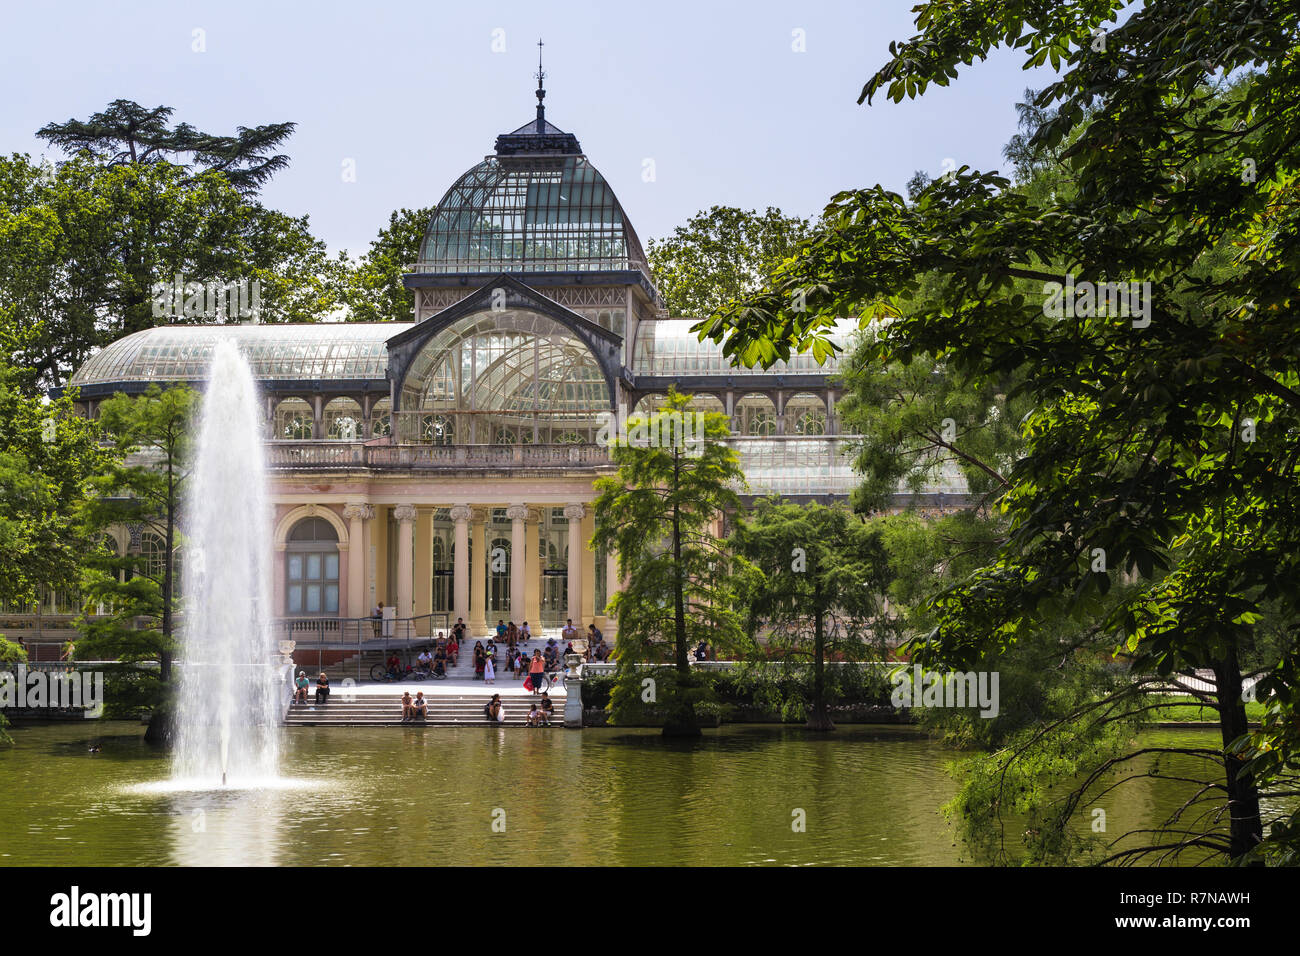 The Palacio de Cristal in the Buen Retiro Park, Madrid Stock Photo